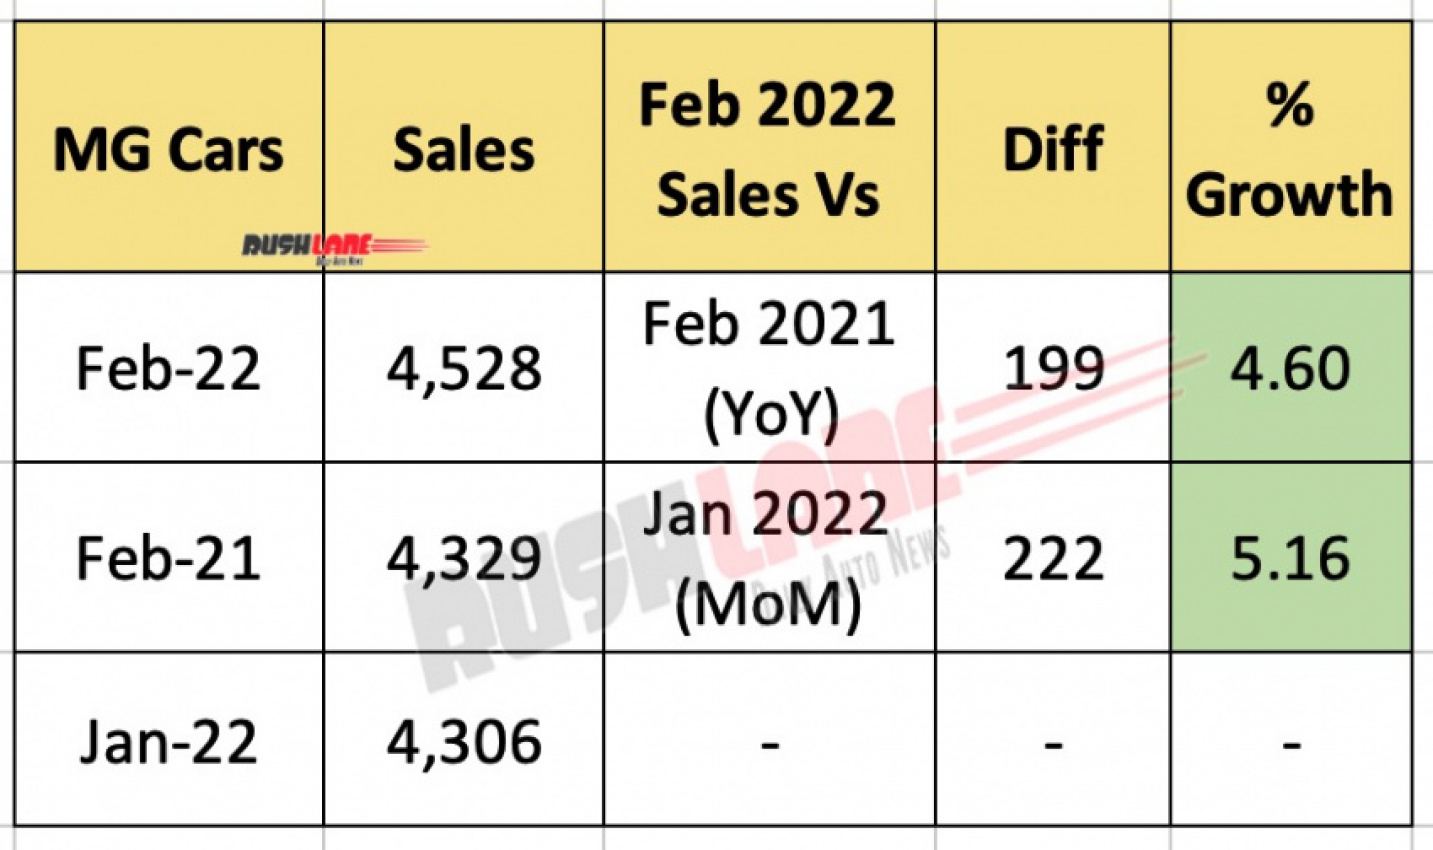 android, cars, mg, reviews, mg motor, android, mg motor sales feb 2022 at 4,528 units – hector, gloster, astor, zs ev